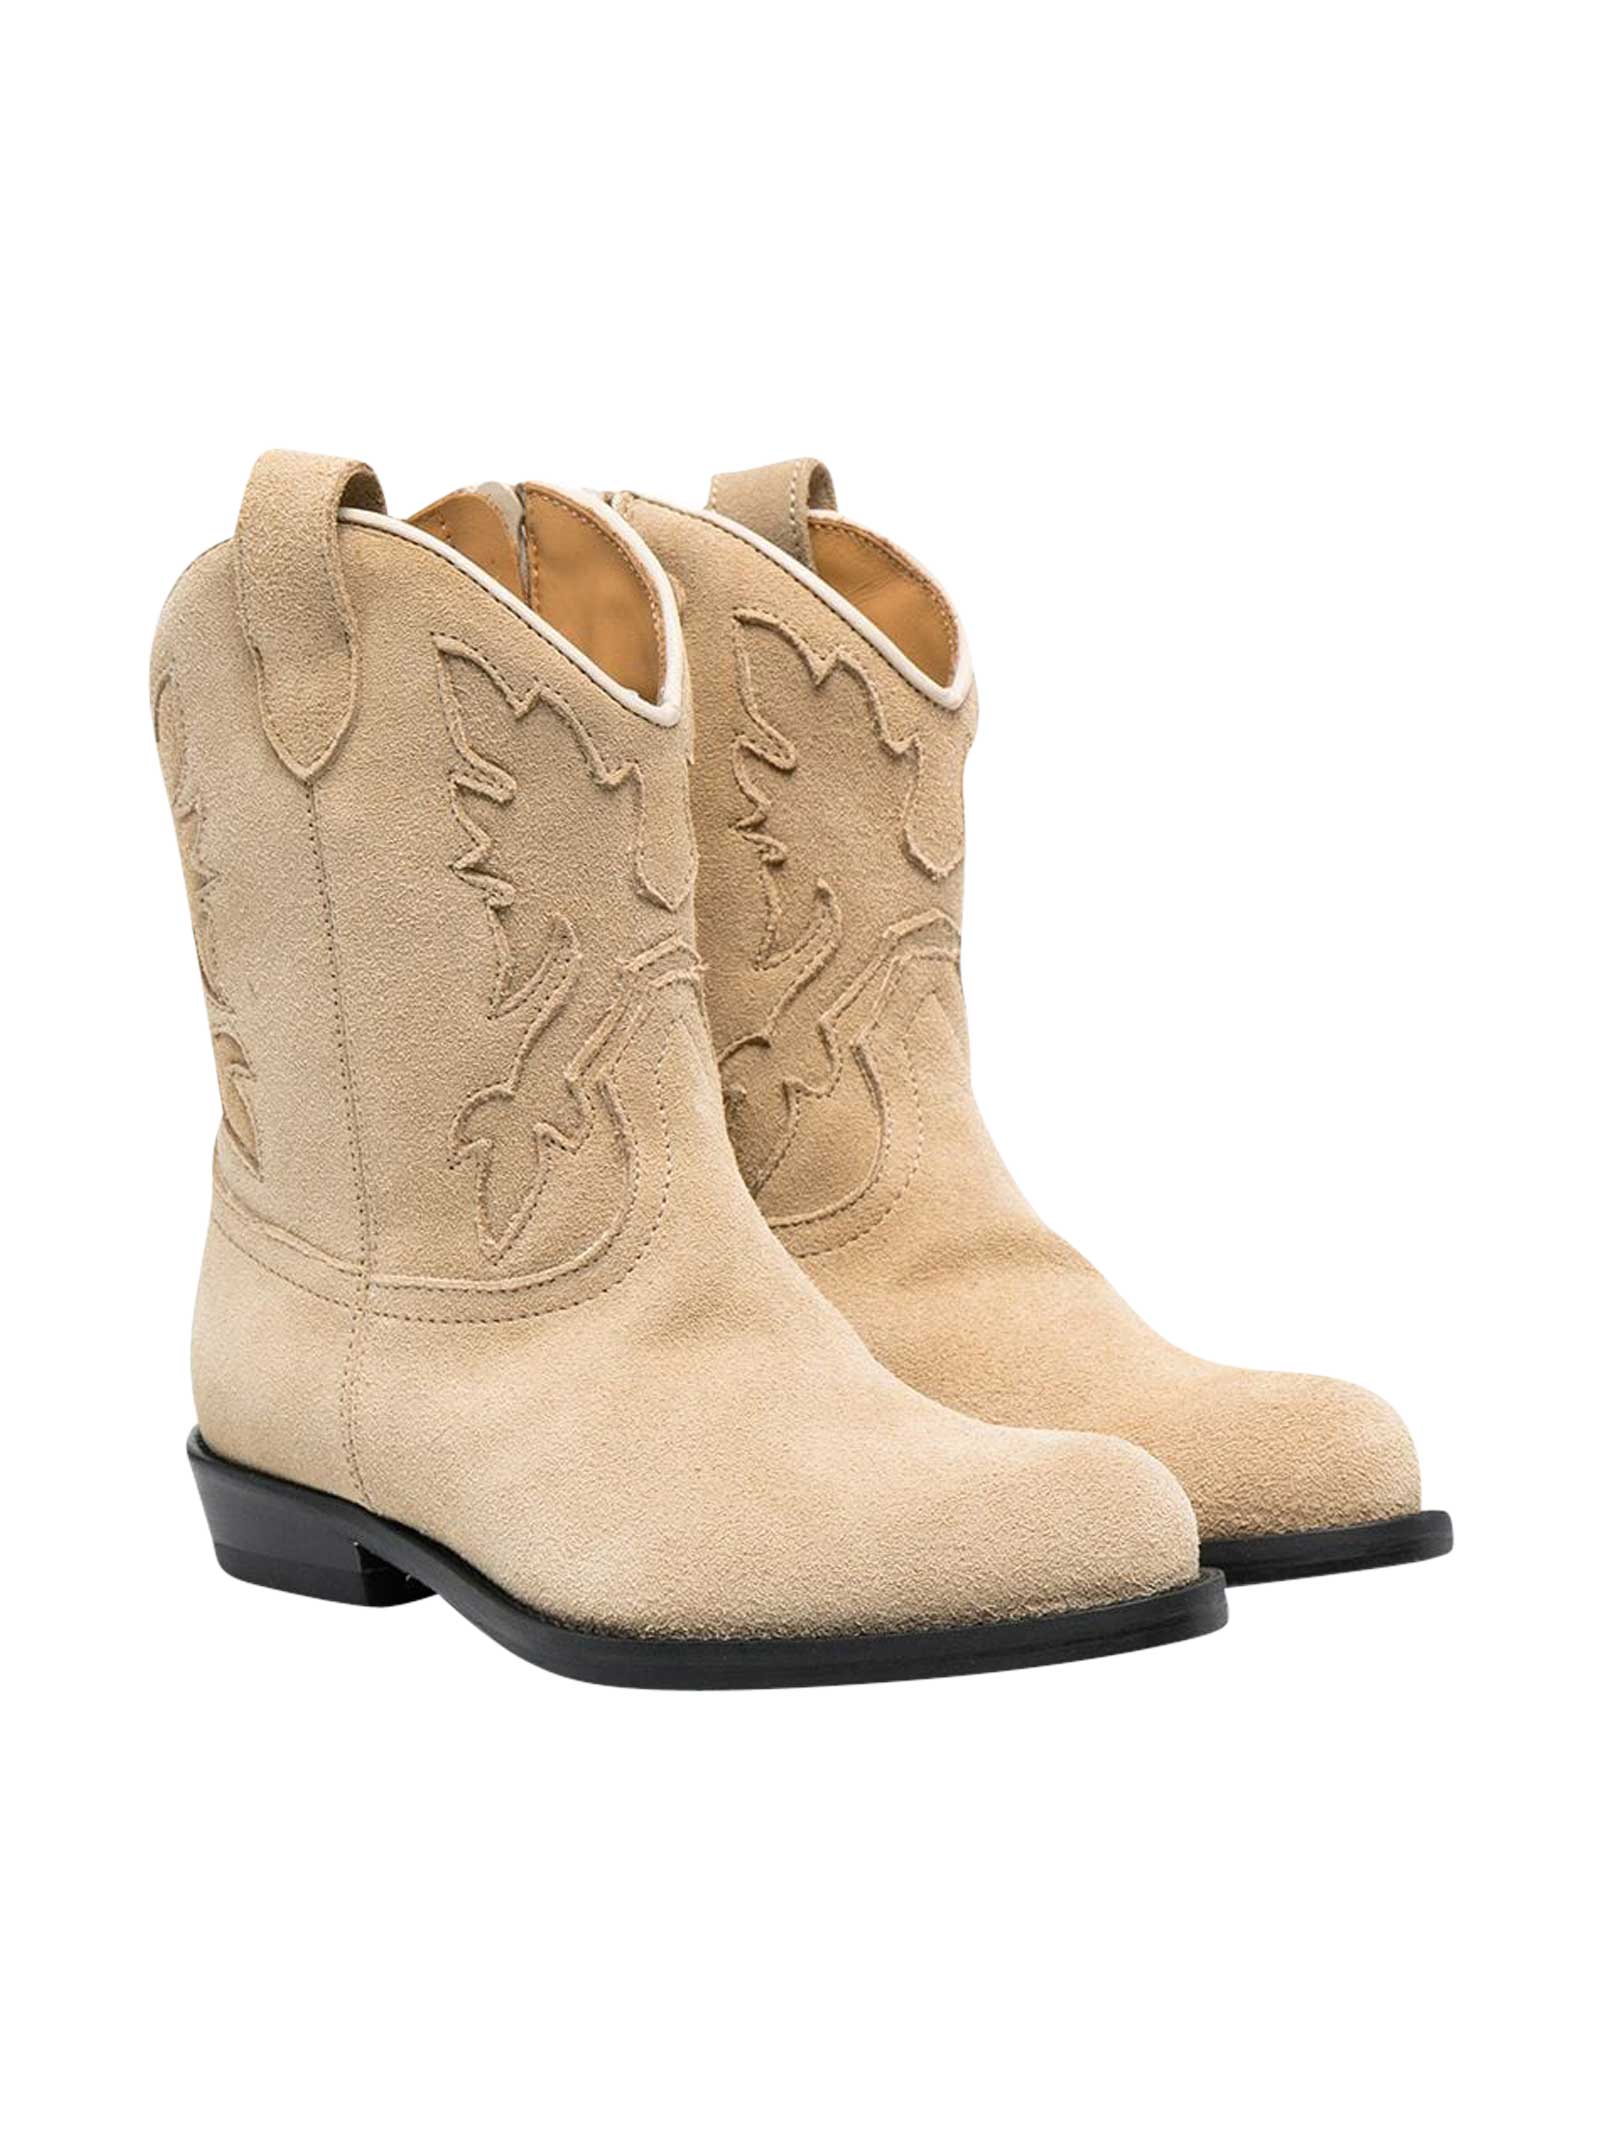 Gallucci Beige Cowboy Boots